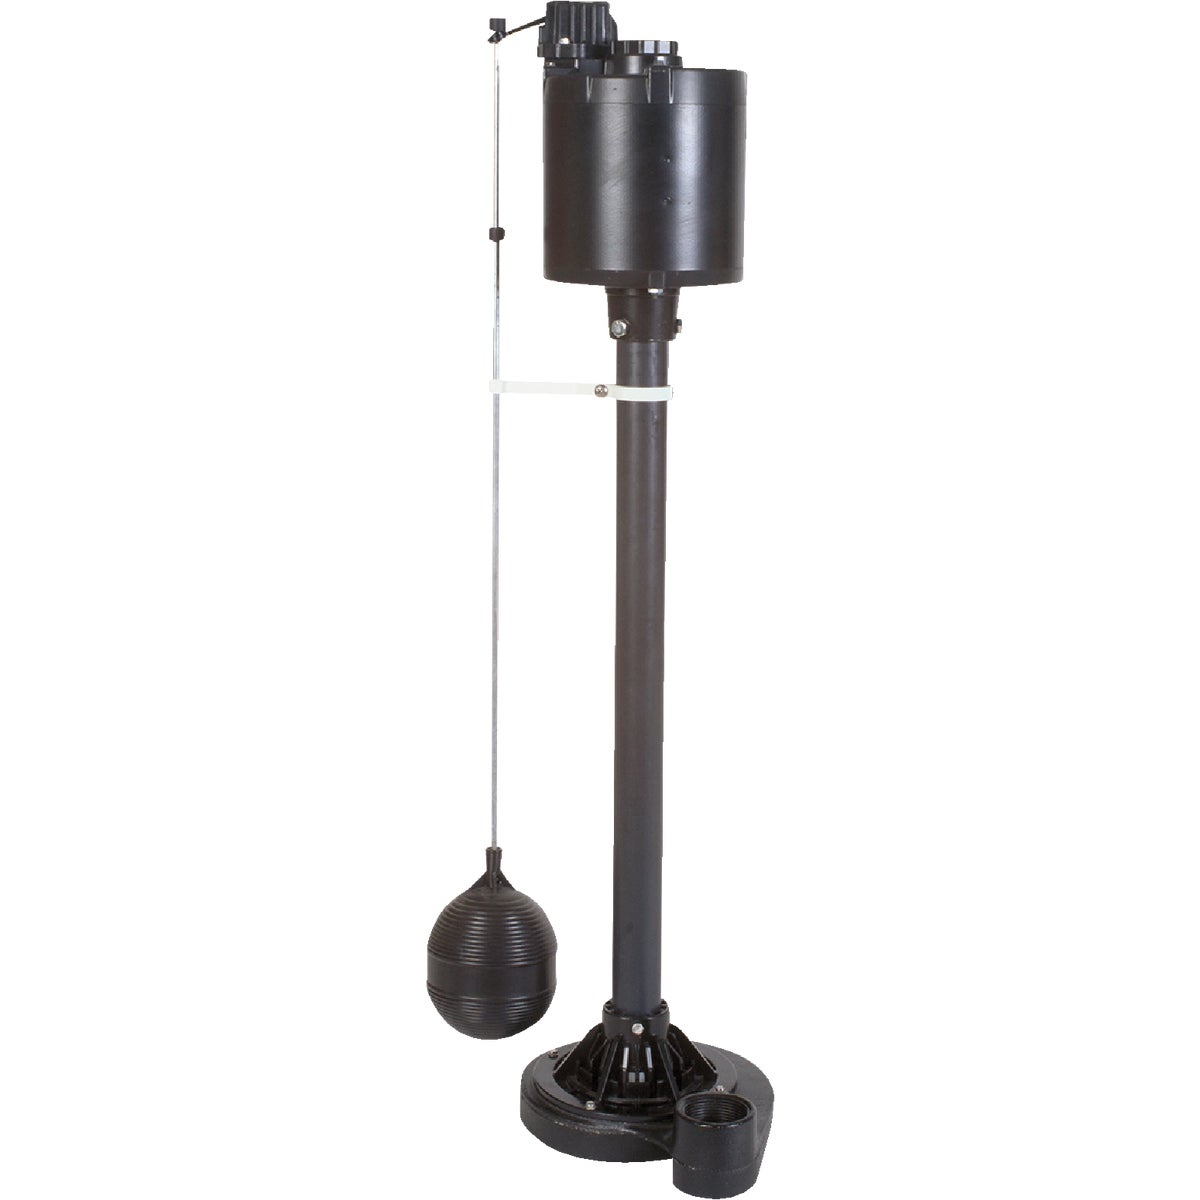 Item 440752, 1/2 HP Pedestal Sump Pump.